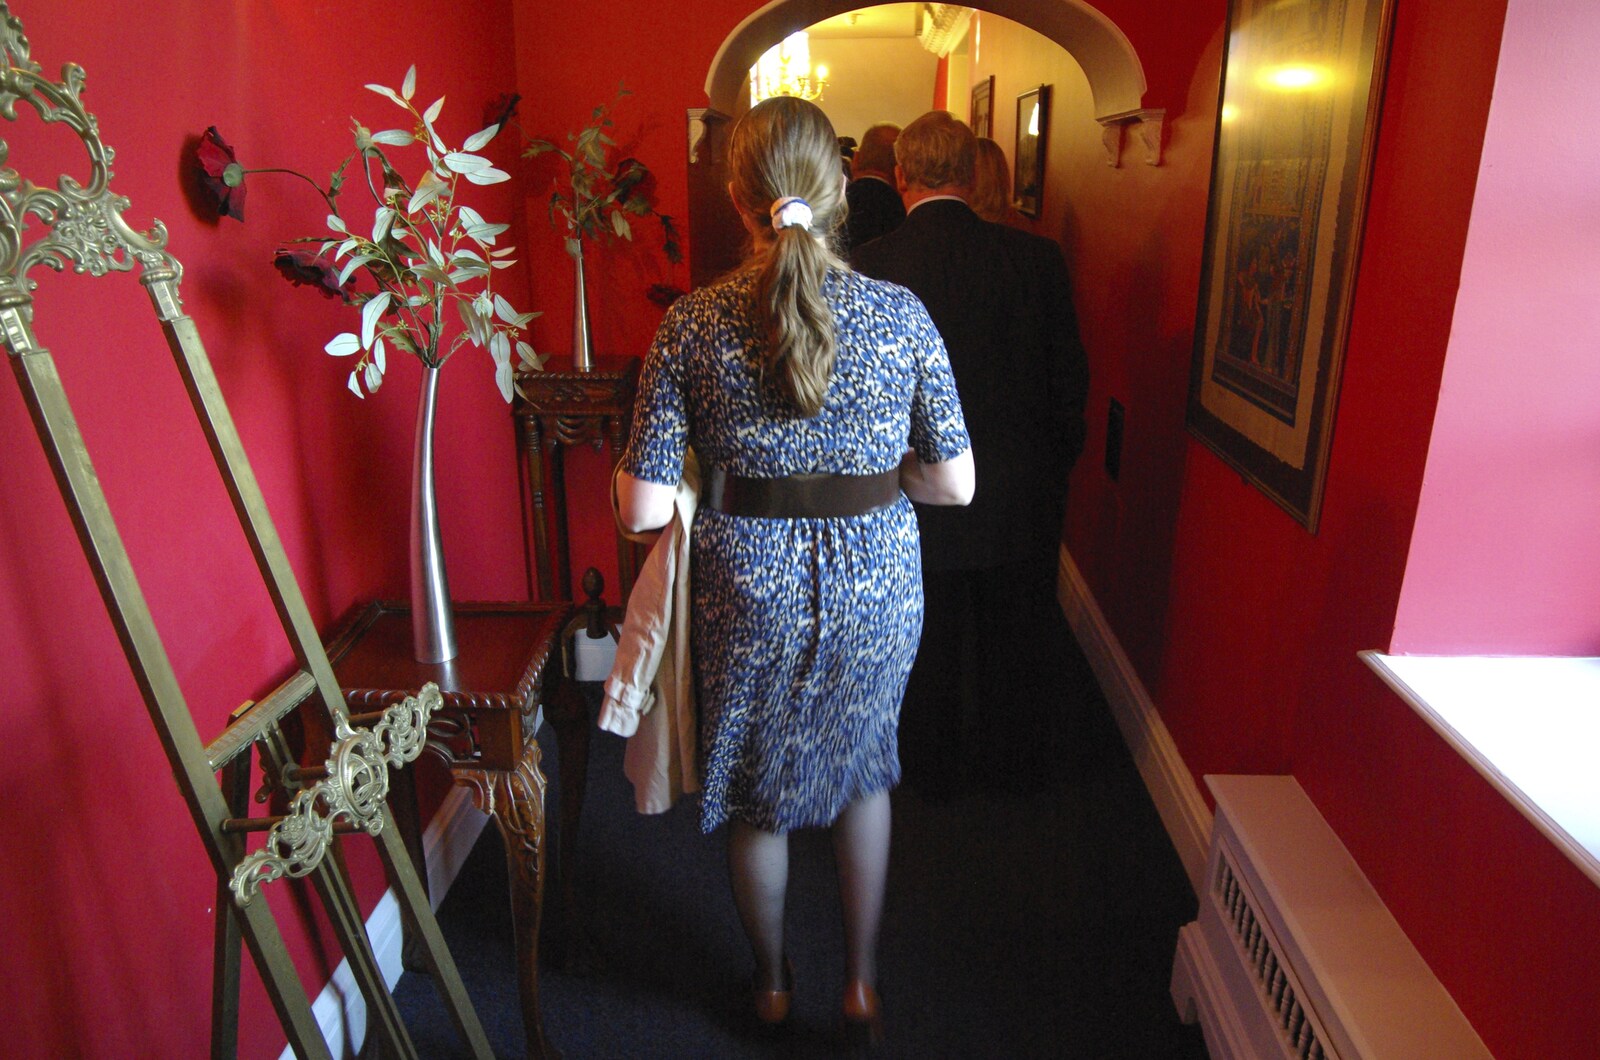 Matt and Emma's Wedding, Quendon, Essex - 7th November 2008: Isobel in a red corridor